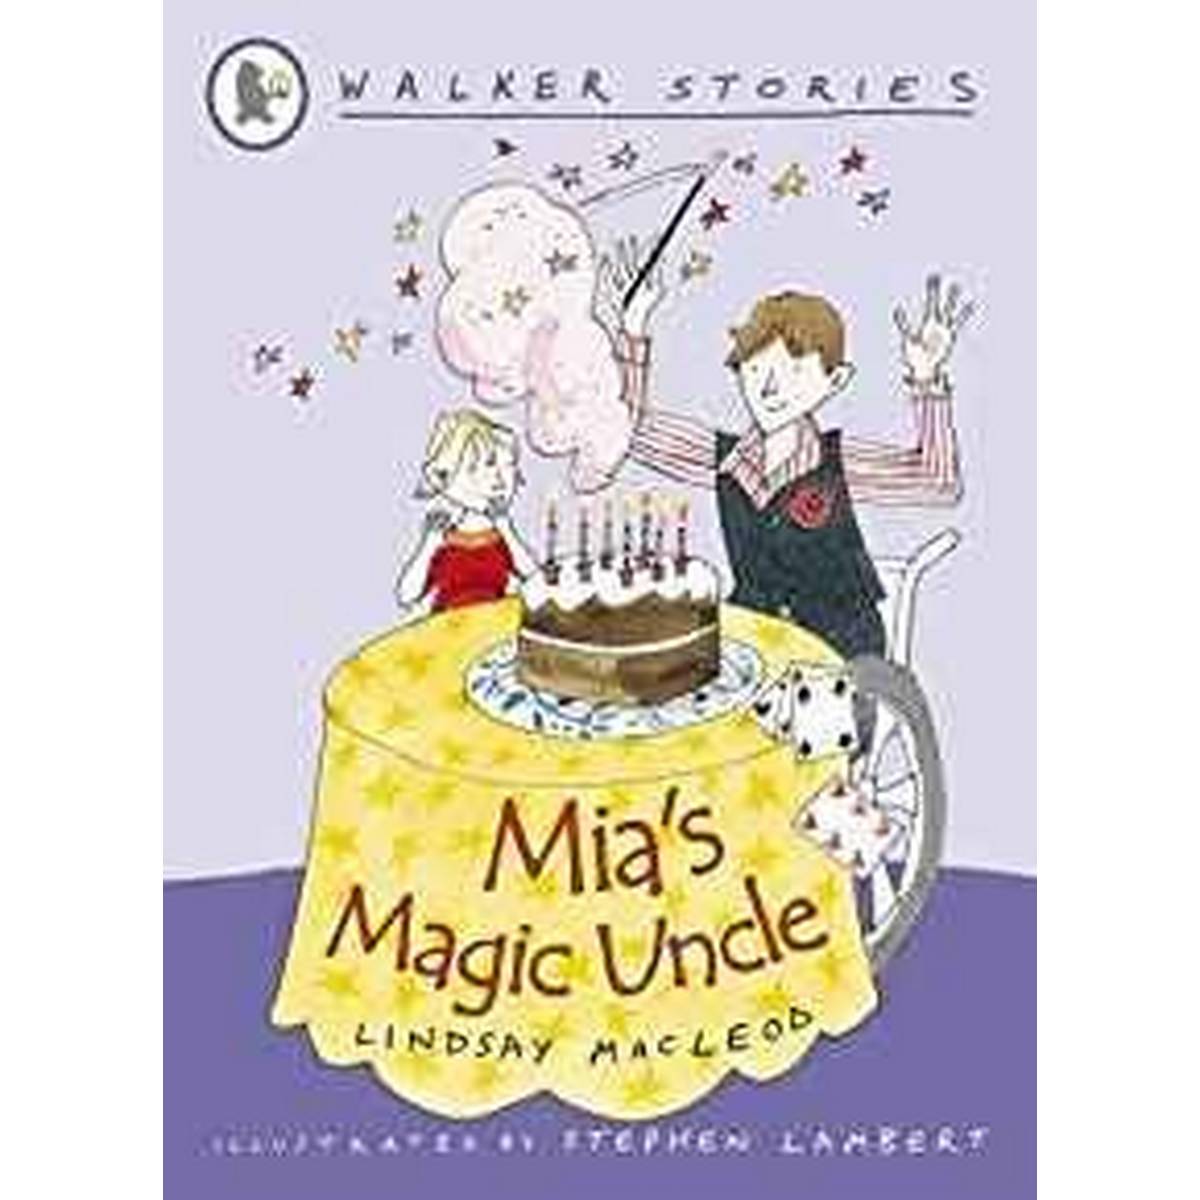 Mia's Magic Uncle (Walker Stories)